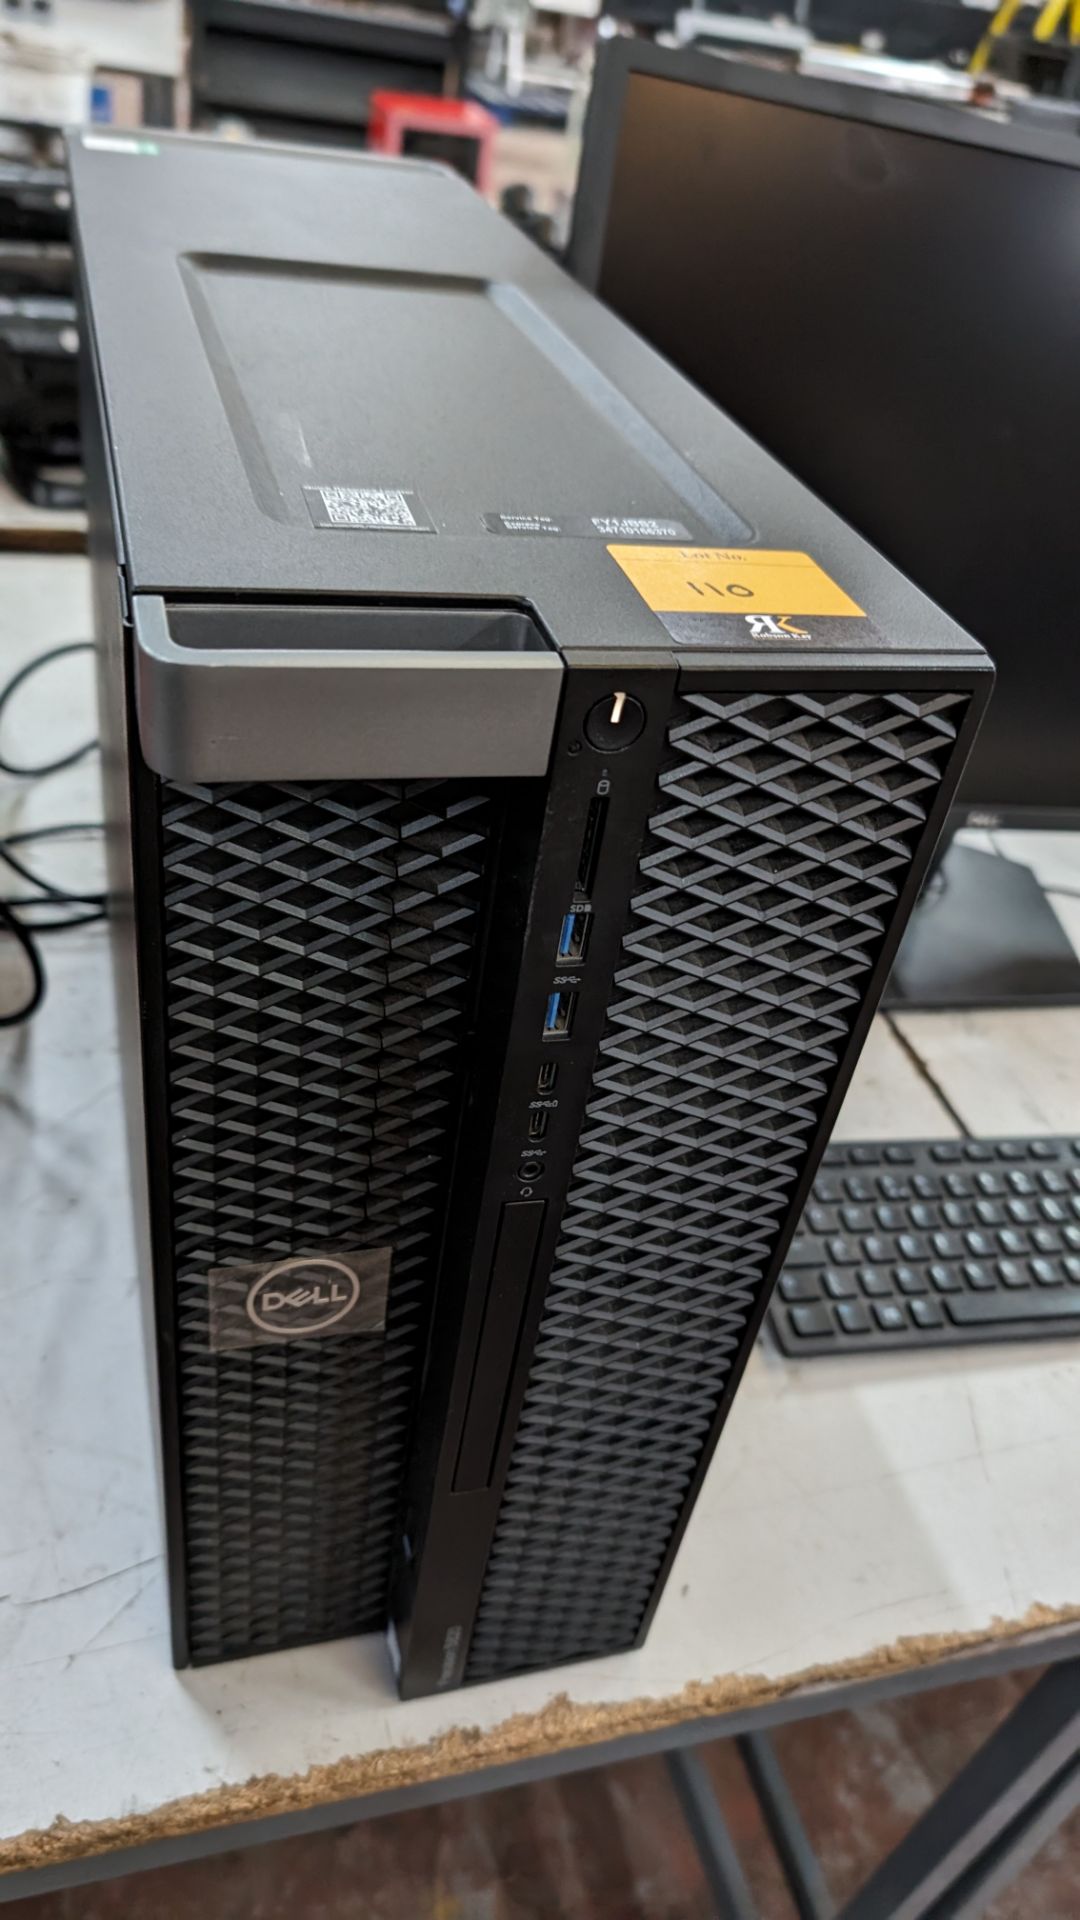 Dell Precision 5820 tower workstation with Intel Xeon CPU, Nvidia Quadro P4000 graphics card includi - Image 4 of 14